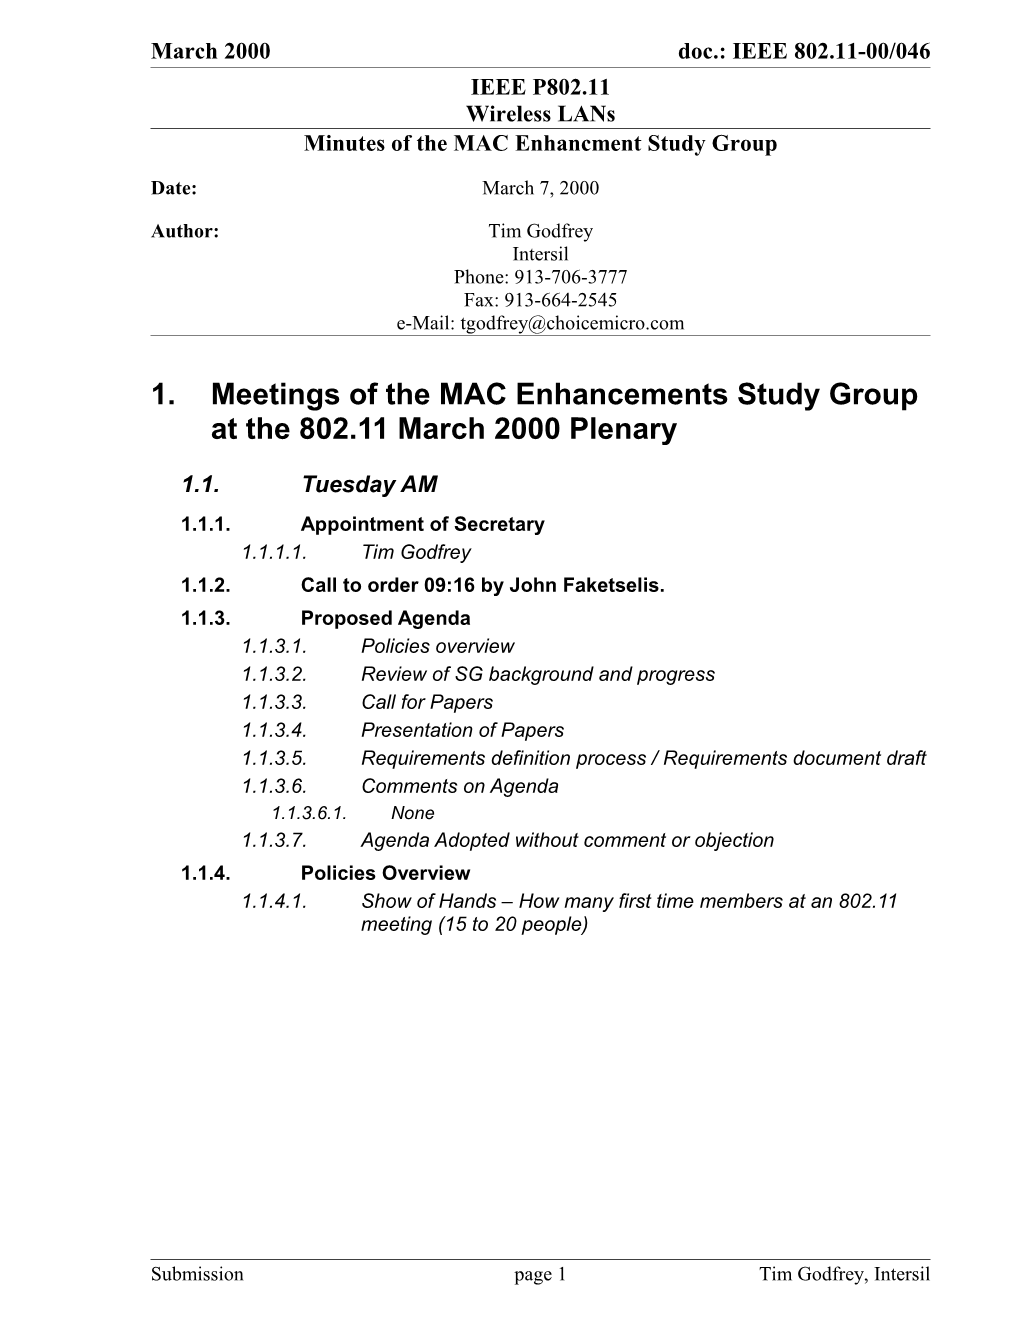 Minutes of the MAC Enhancment Study Group